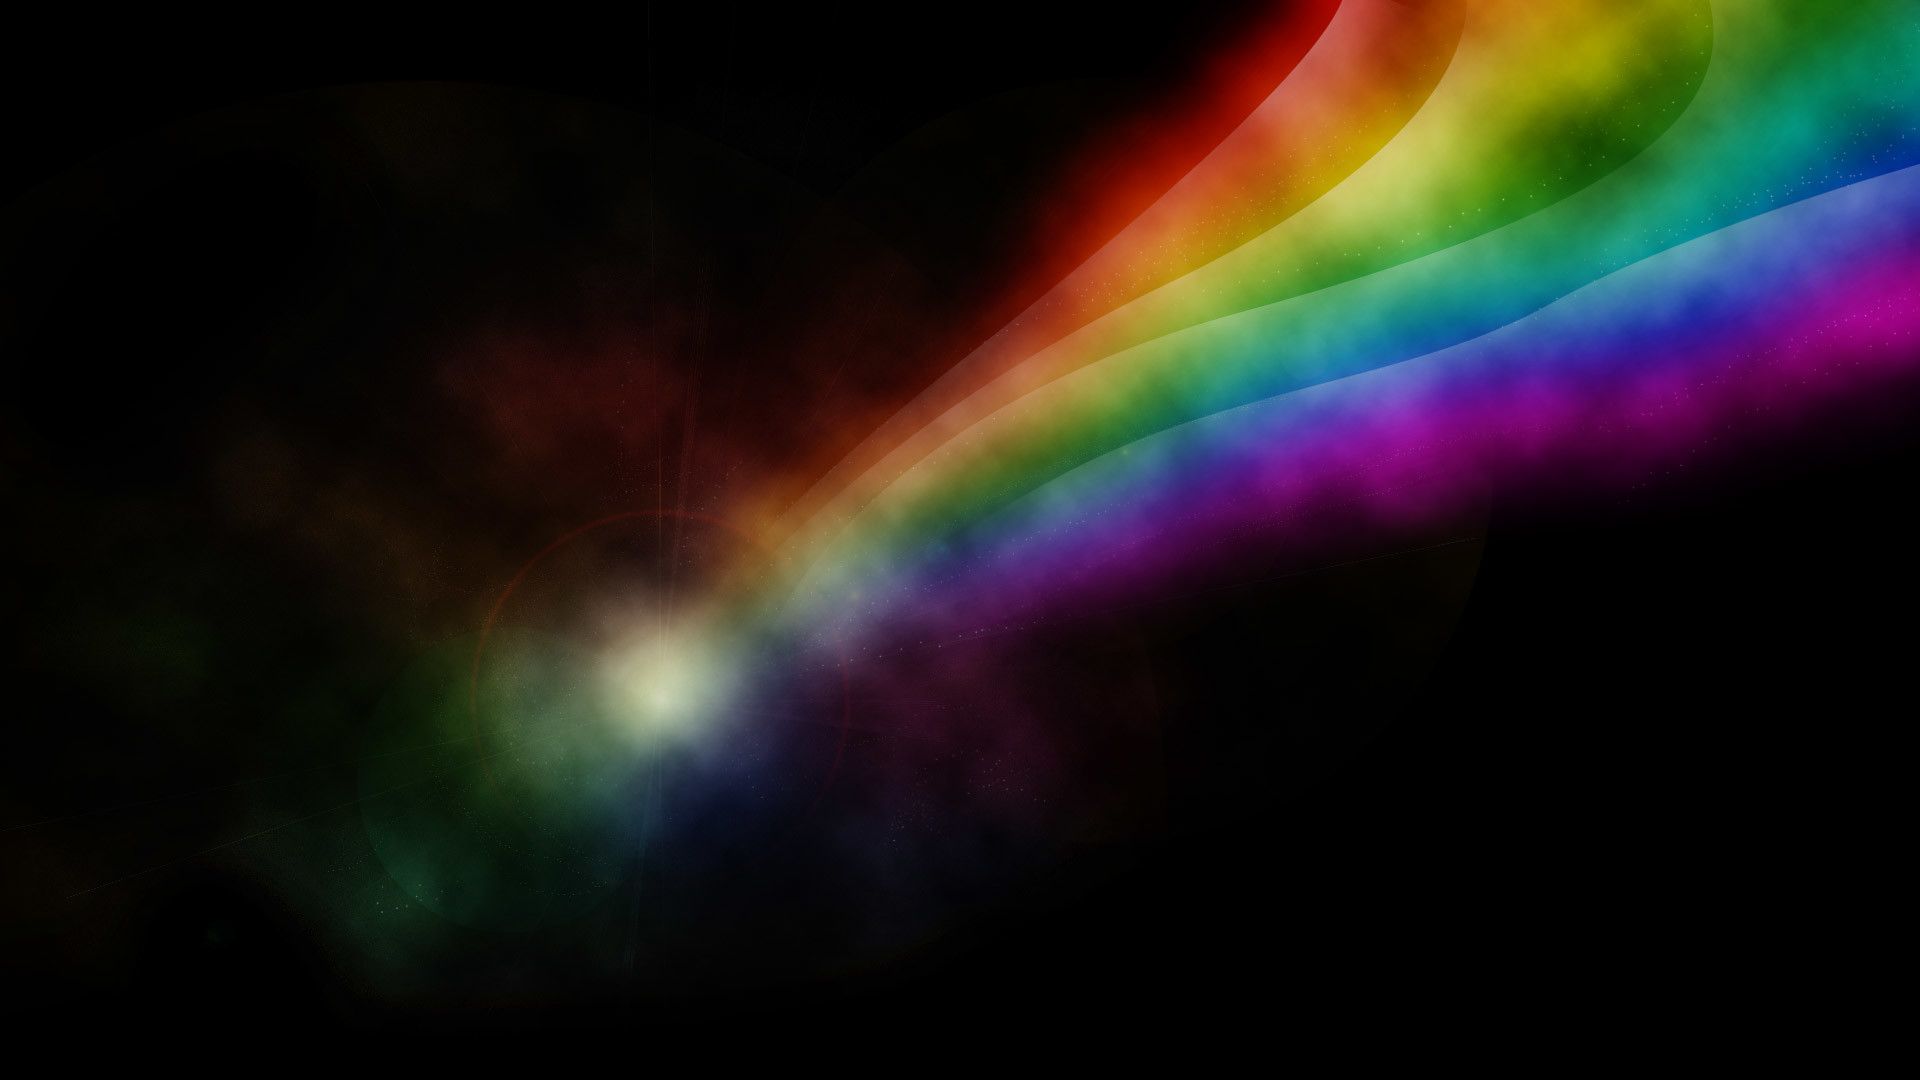 A colorful rainbow on a black background - Rainbows